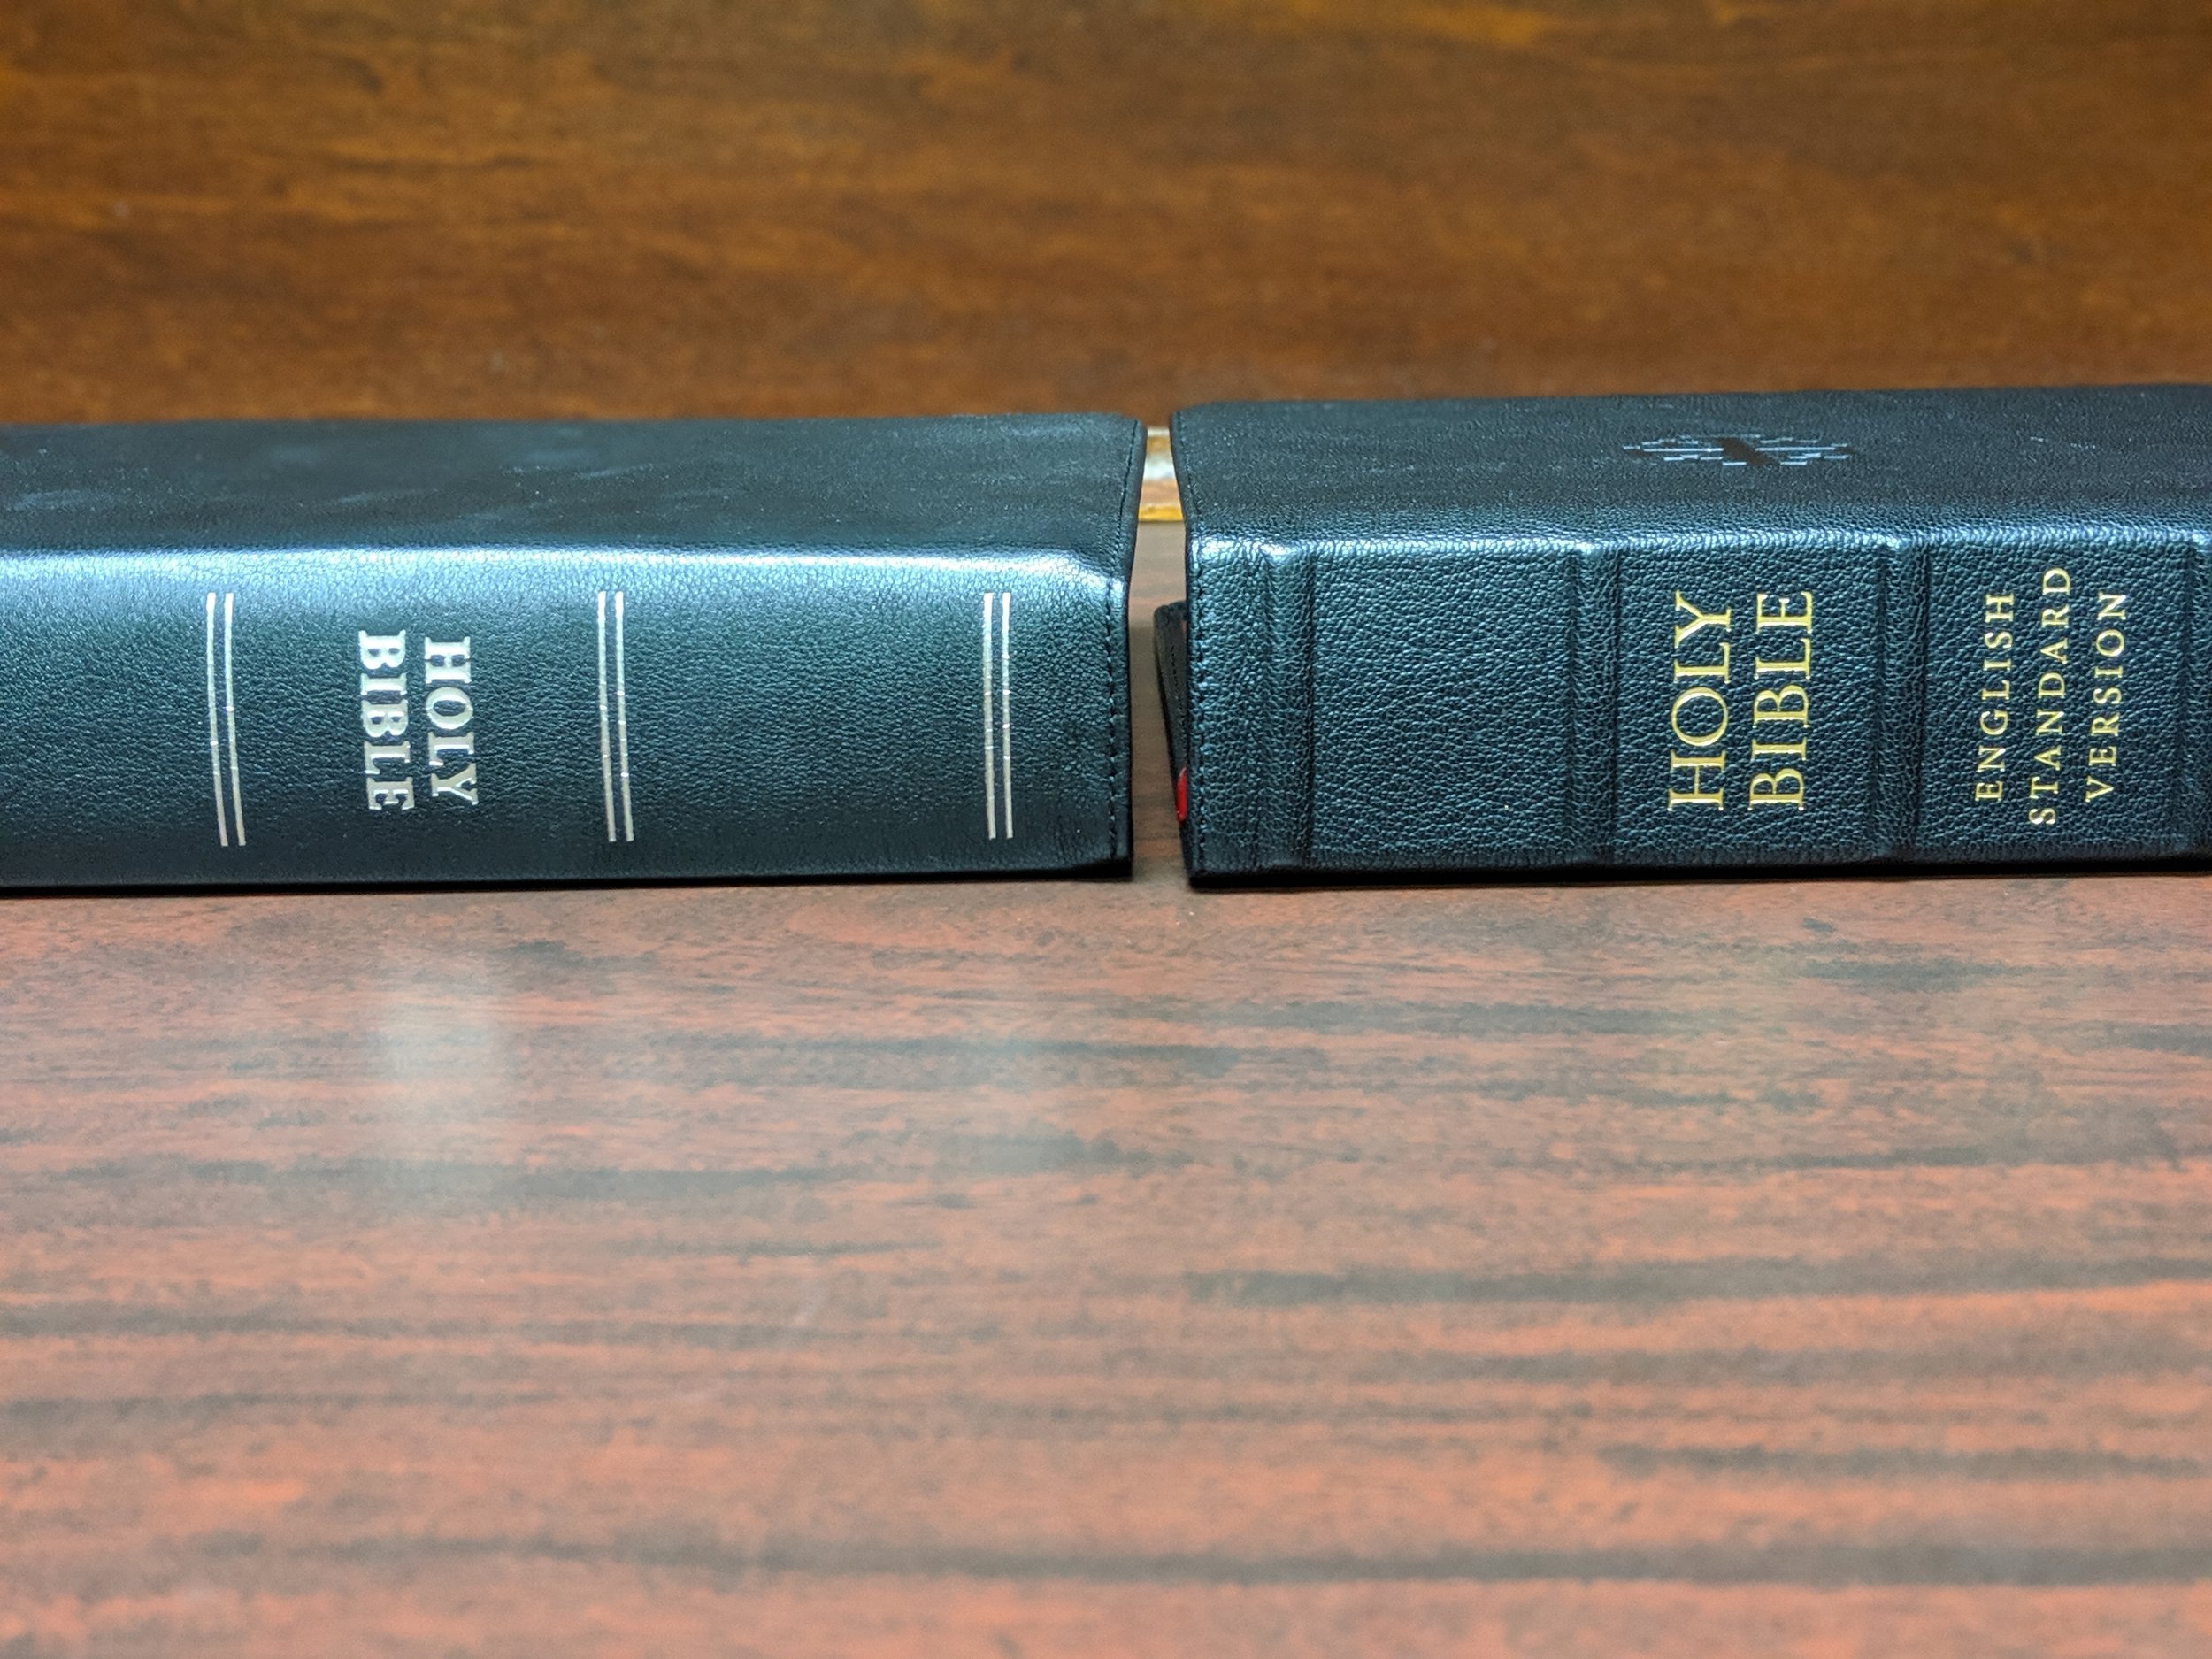  NIV Premier Bible - left Schuyler Credo Quentel - right 